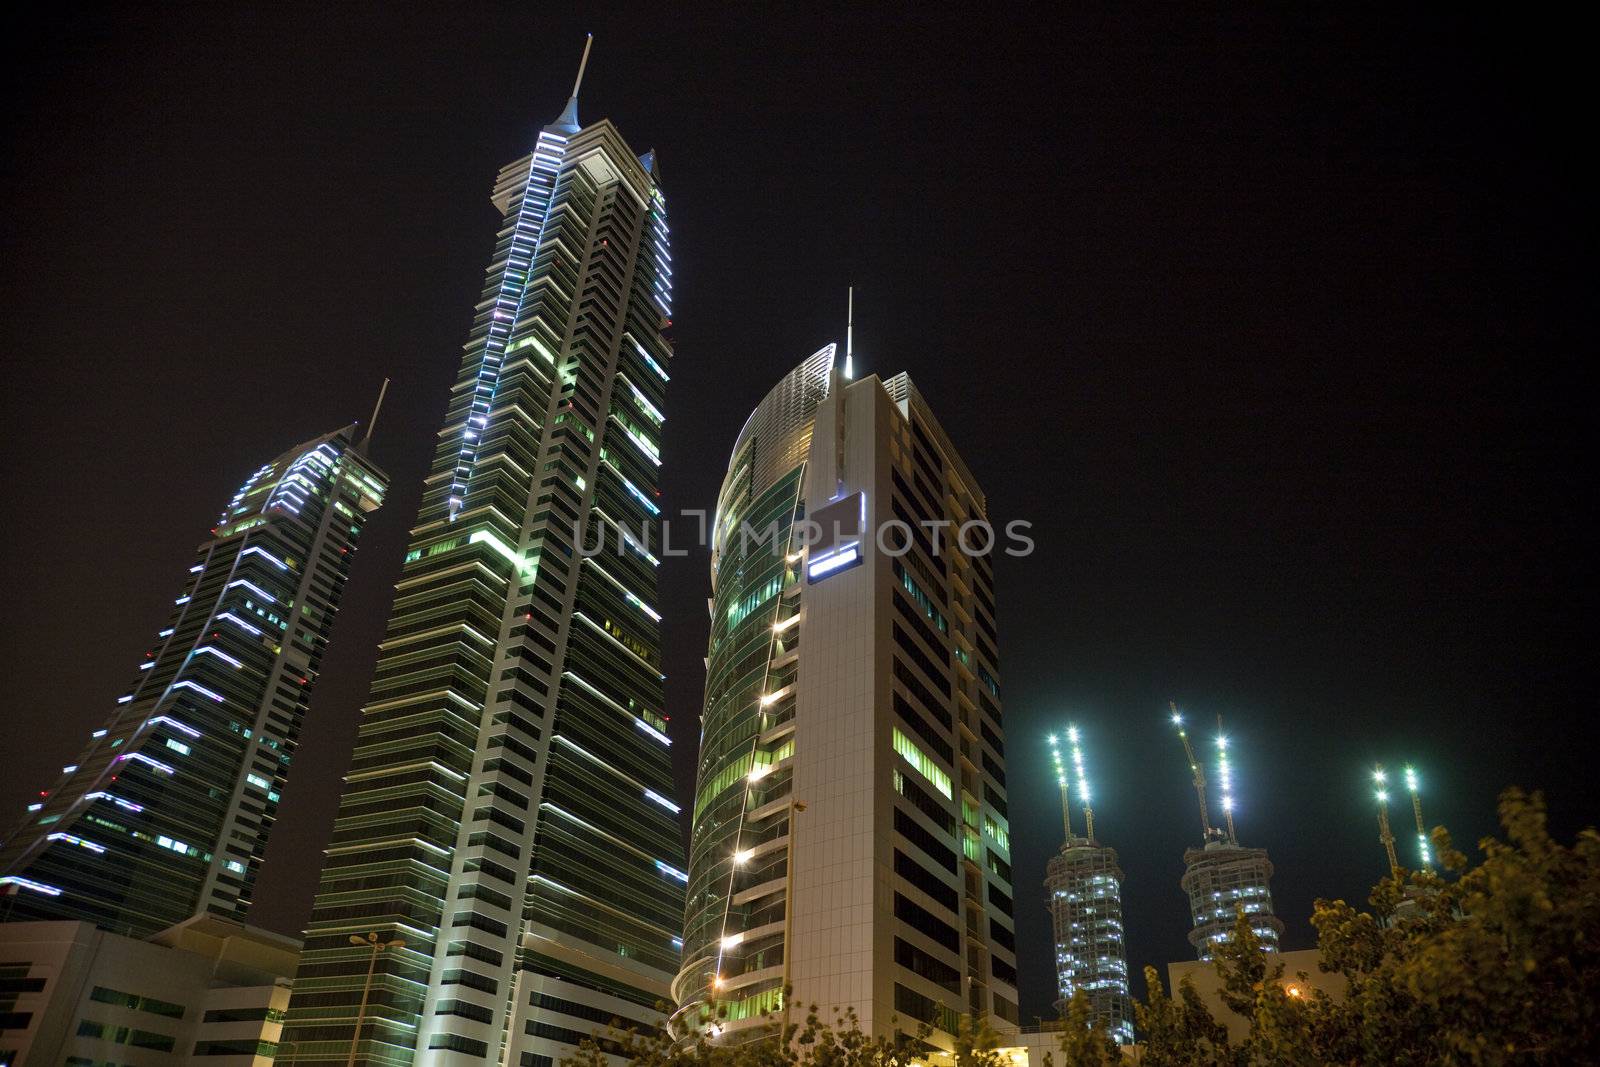 Night image of Bahrain's iconic buildings, the Bahrain Financial Harbour, Manama, Bahrain.